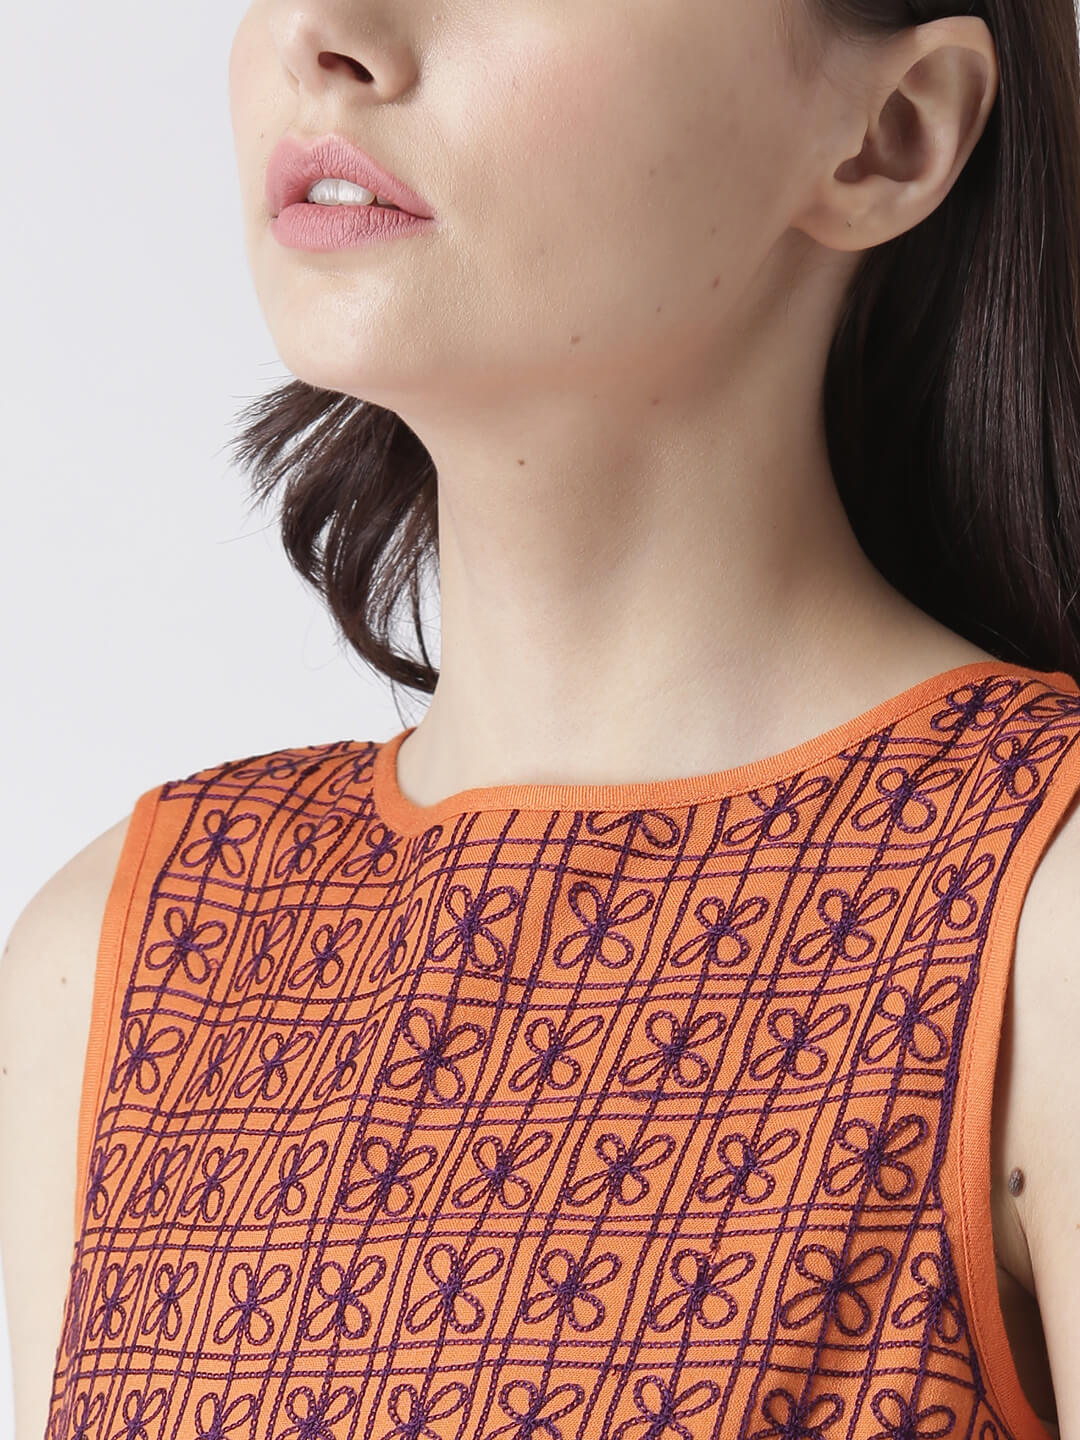 Msfq Women'S Sleeveless Orange Top With Embroidered Yoke